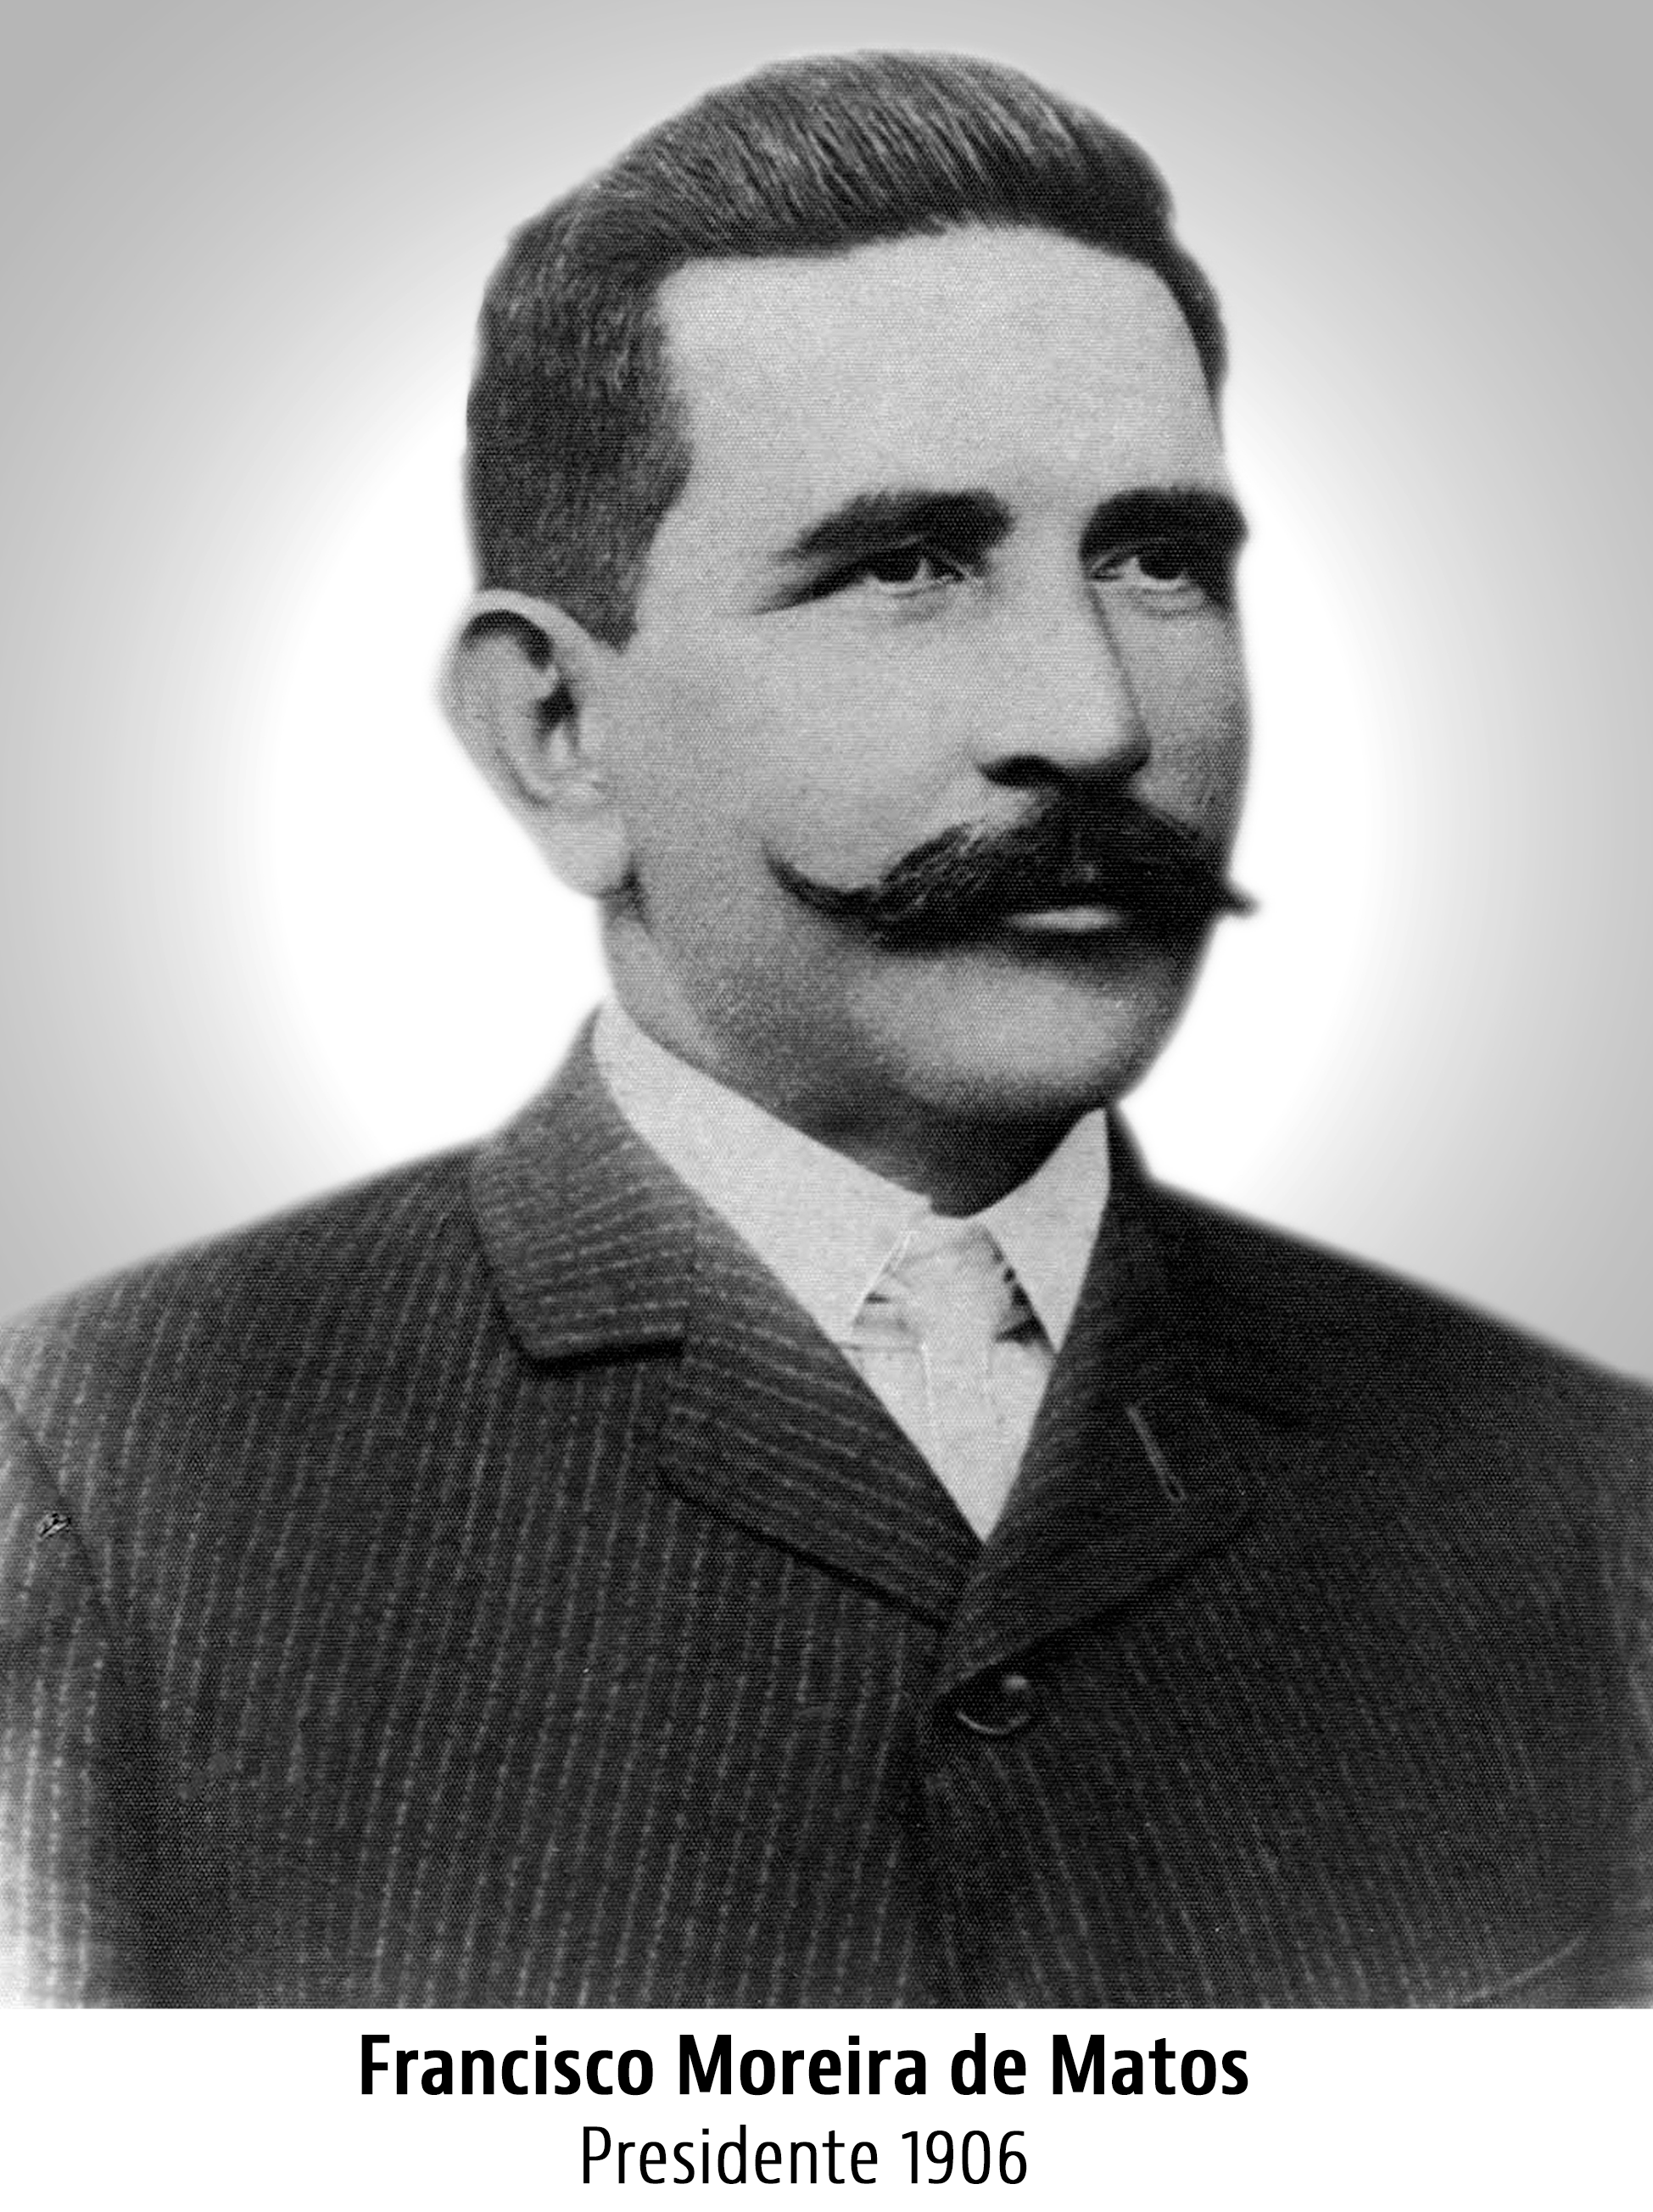 Francisco Moreira de Matos